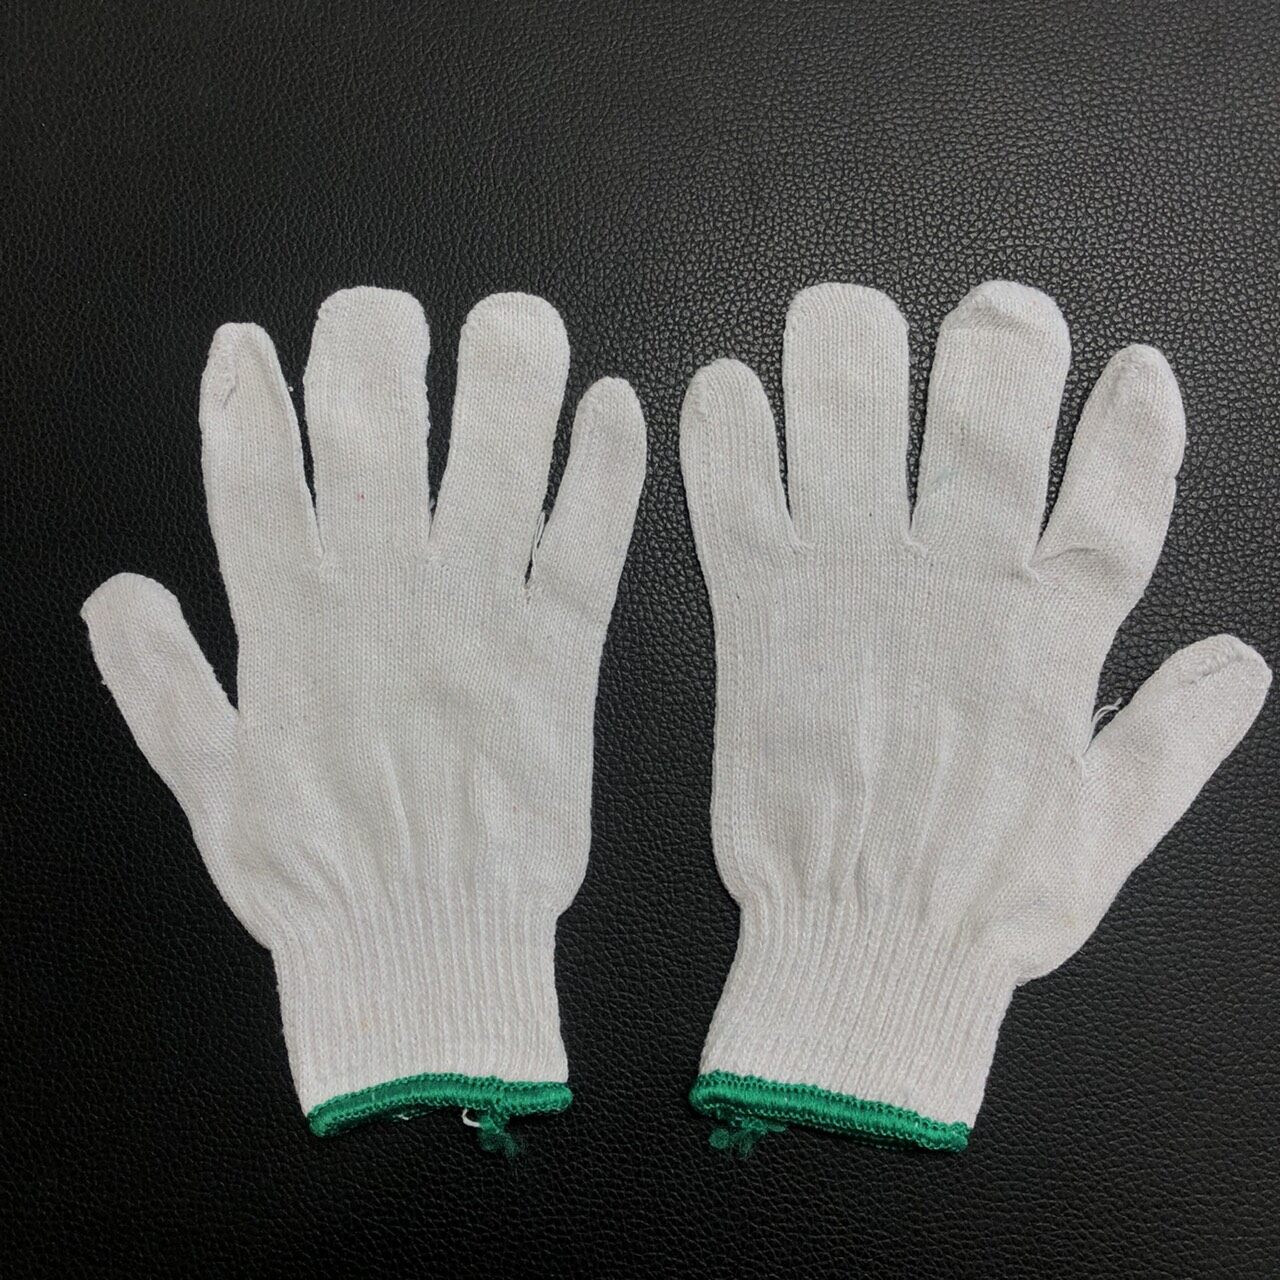 2sonline ⚡️ส่งไว⚡️ ถุงมือผ้าทุกไซส์ 4 ขีด-8 ขีด แบบหนา แบบบาง 1 โหล อย่างดี ผลิตจากเส้นด้ายธรรมชาติ ทอด้วยเครื่องละเอียด 7 เข็ม ราคาโรงงาน